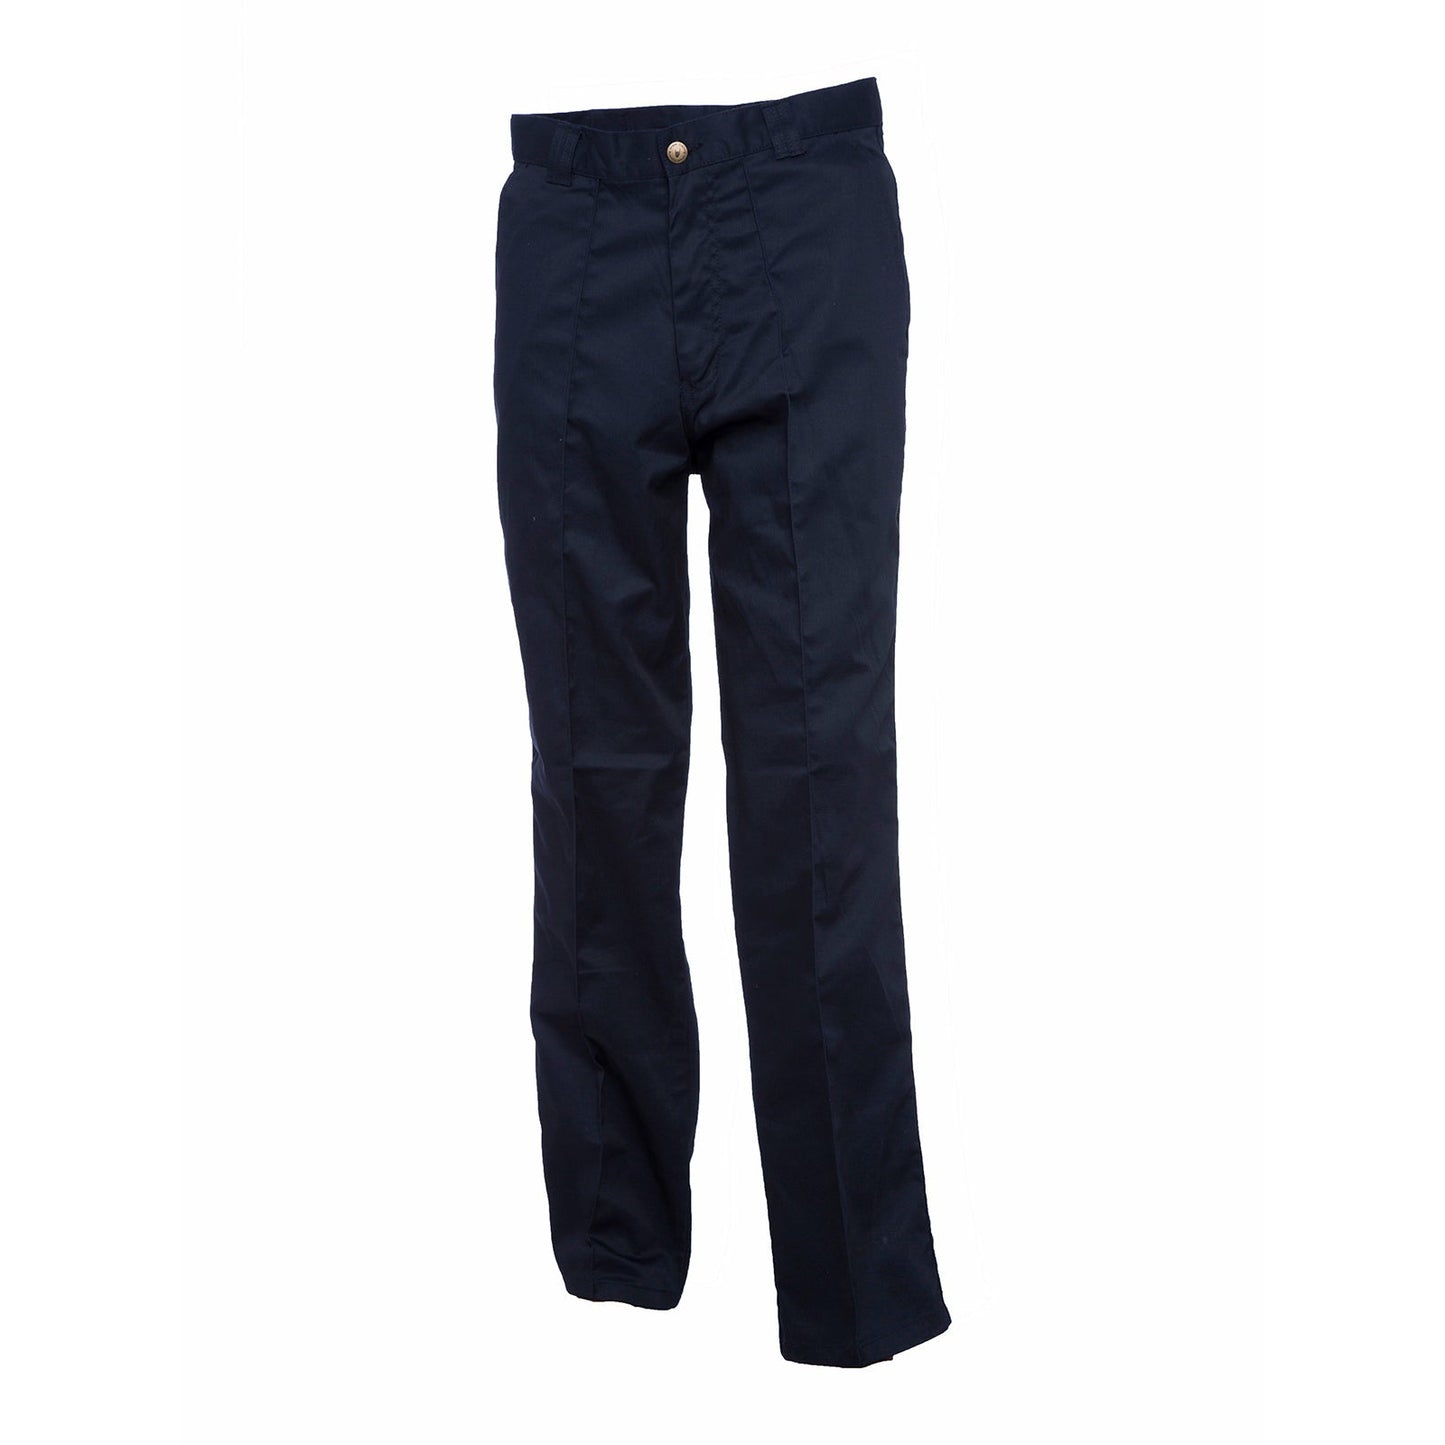 Navy workwear trouser - Regular